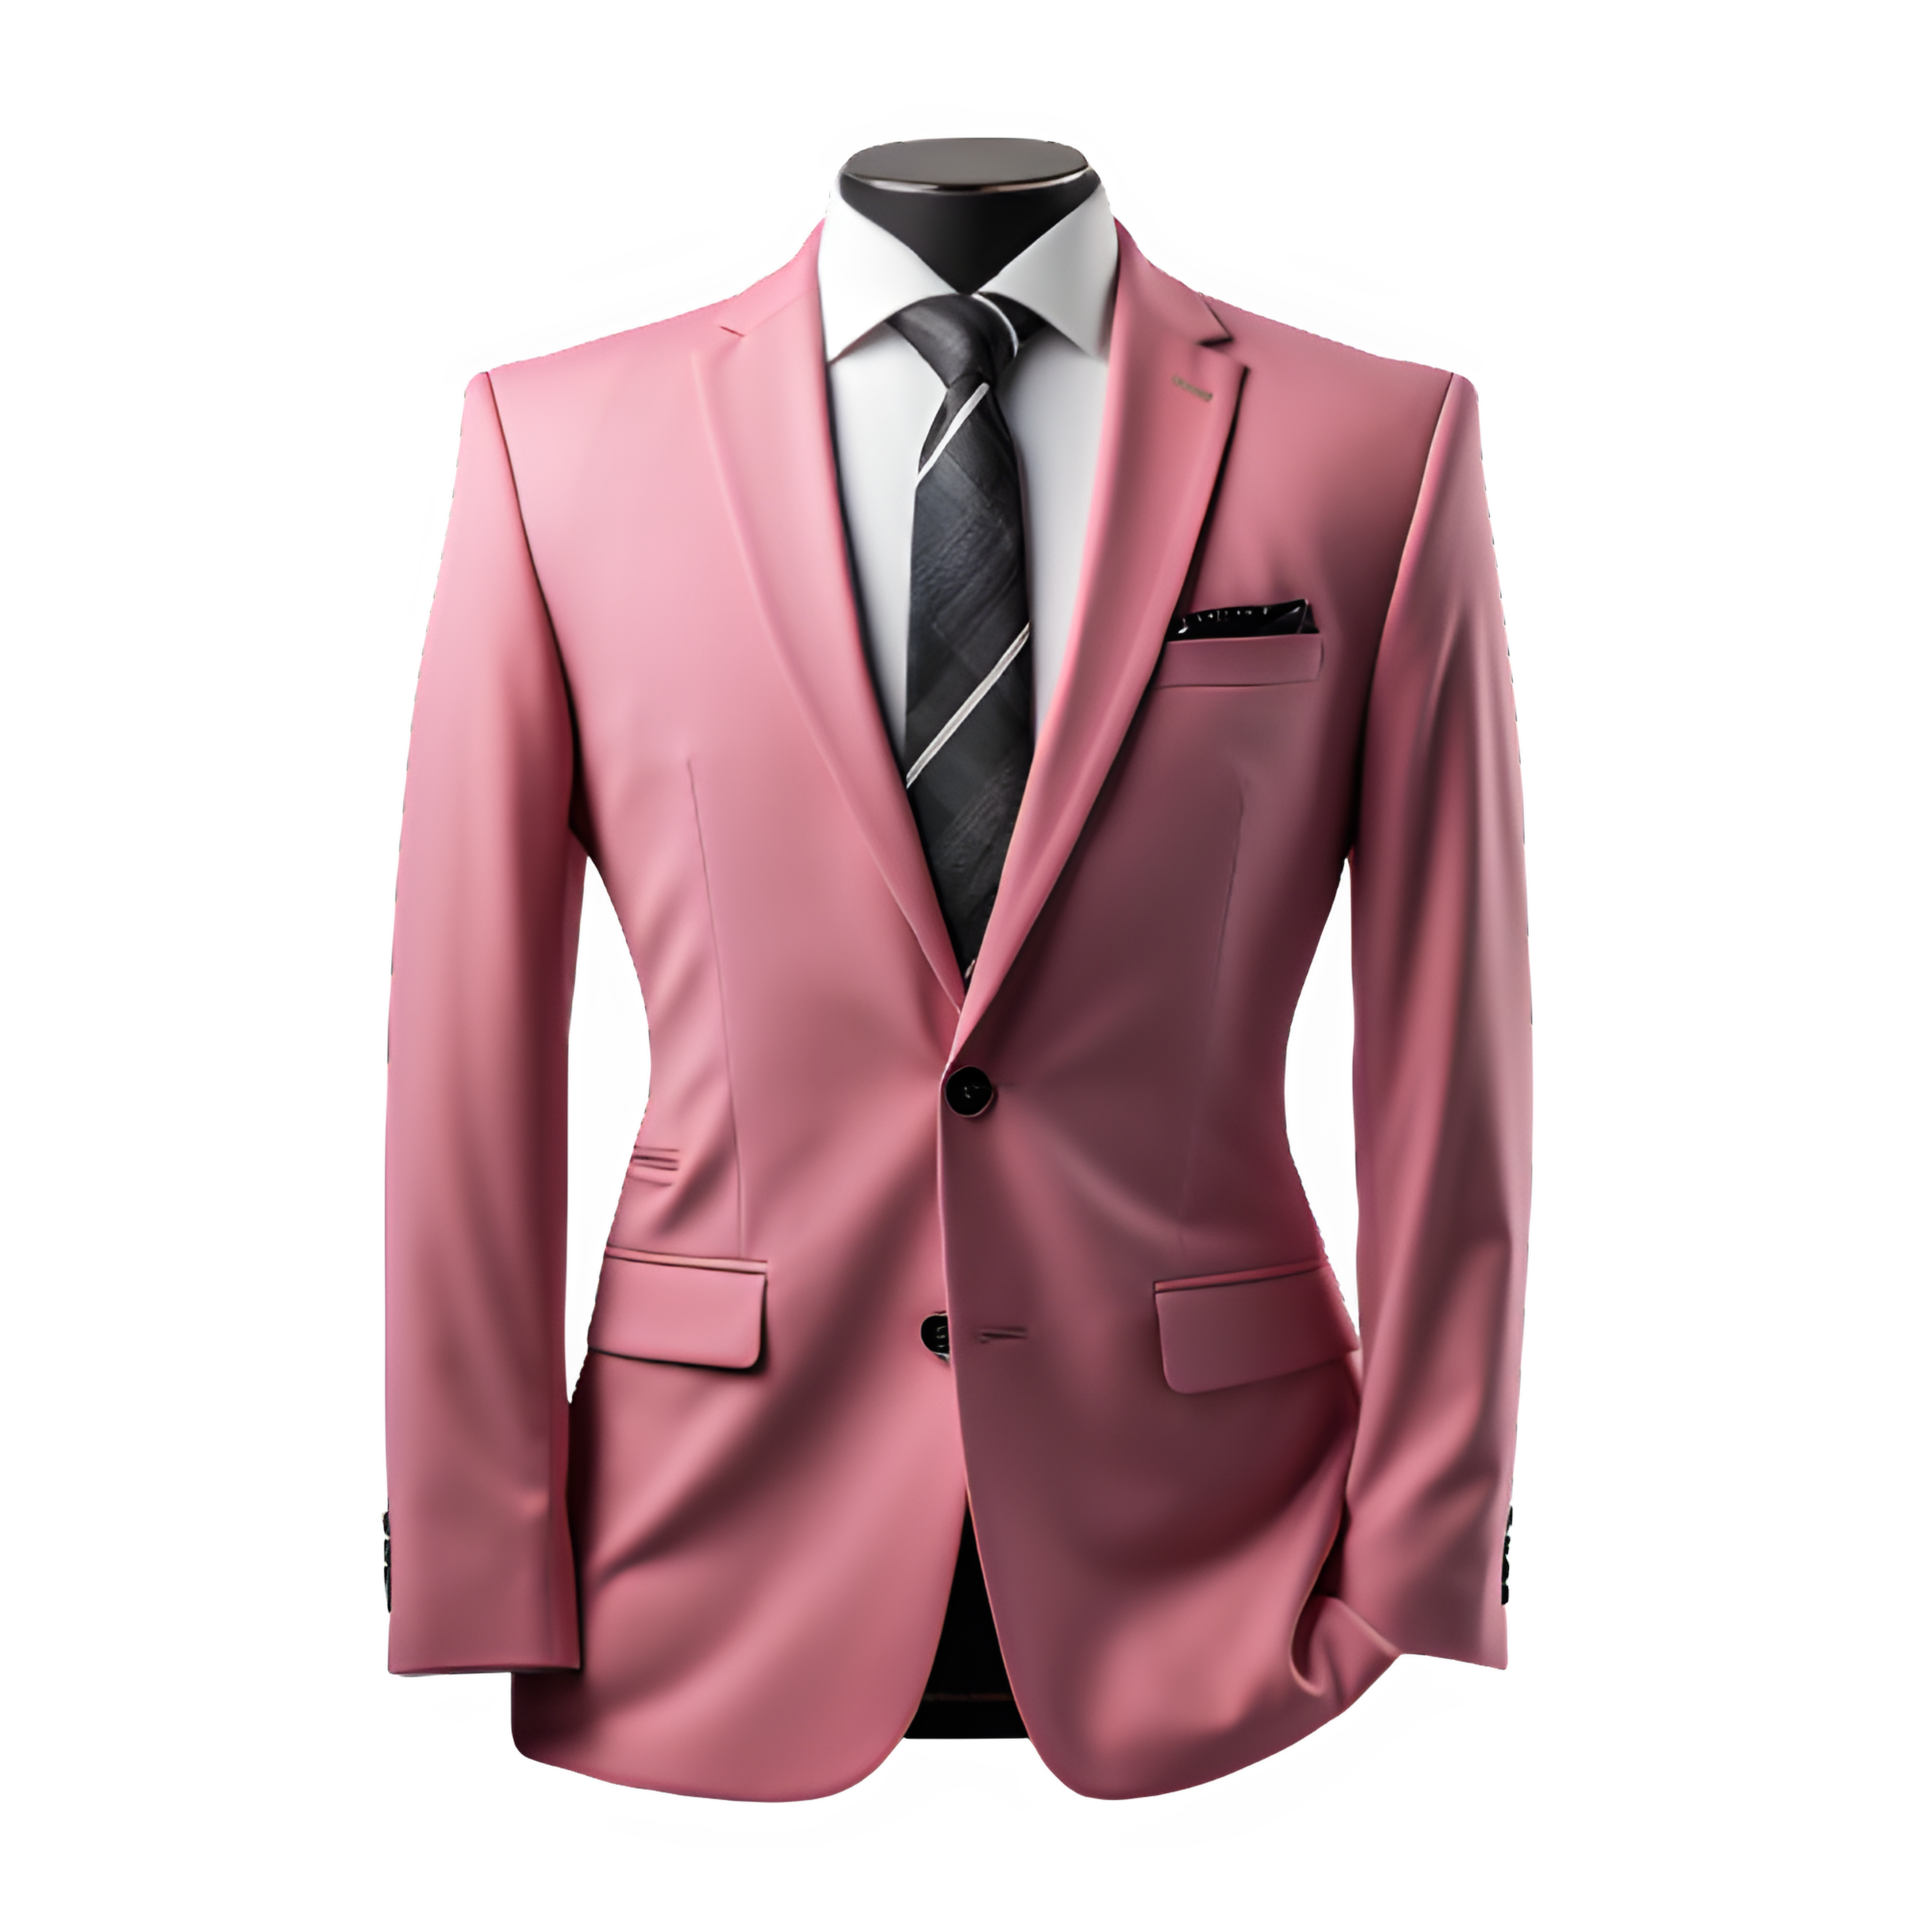 pink tuxedo suit mockup on transparent background ,businessman suit png ...